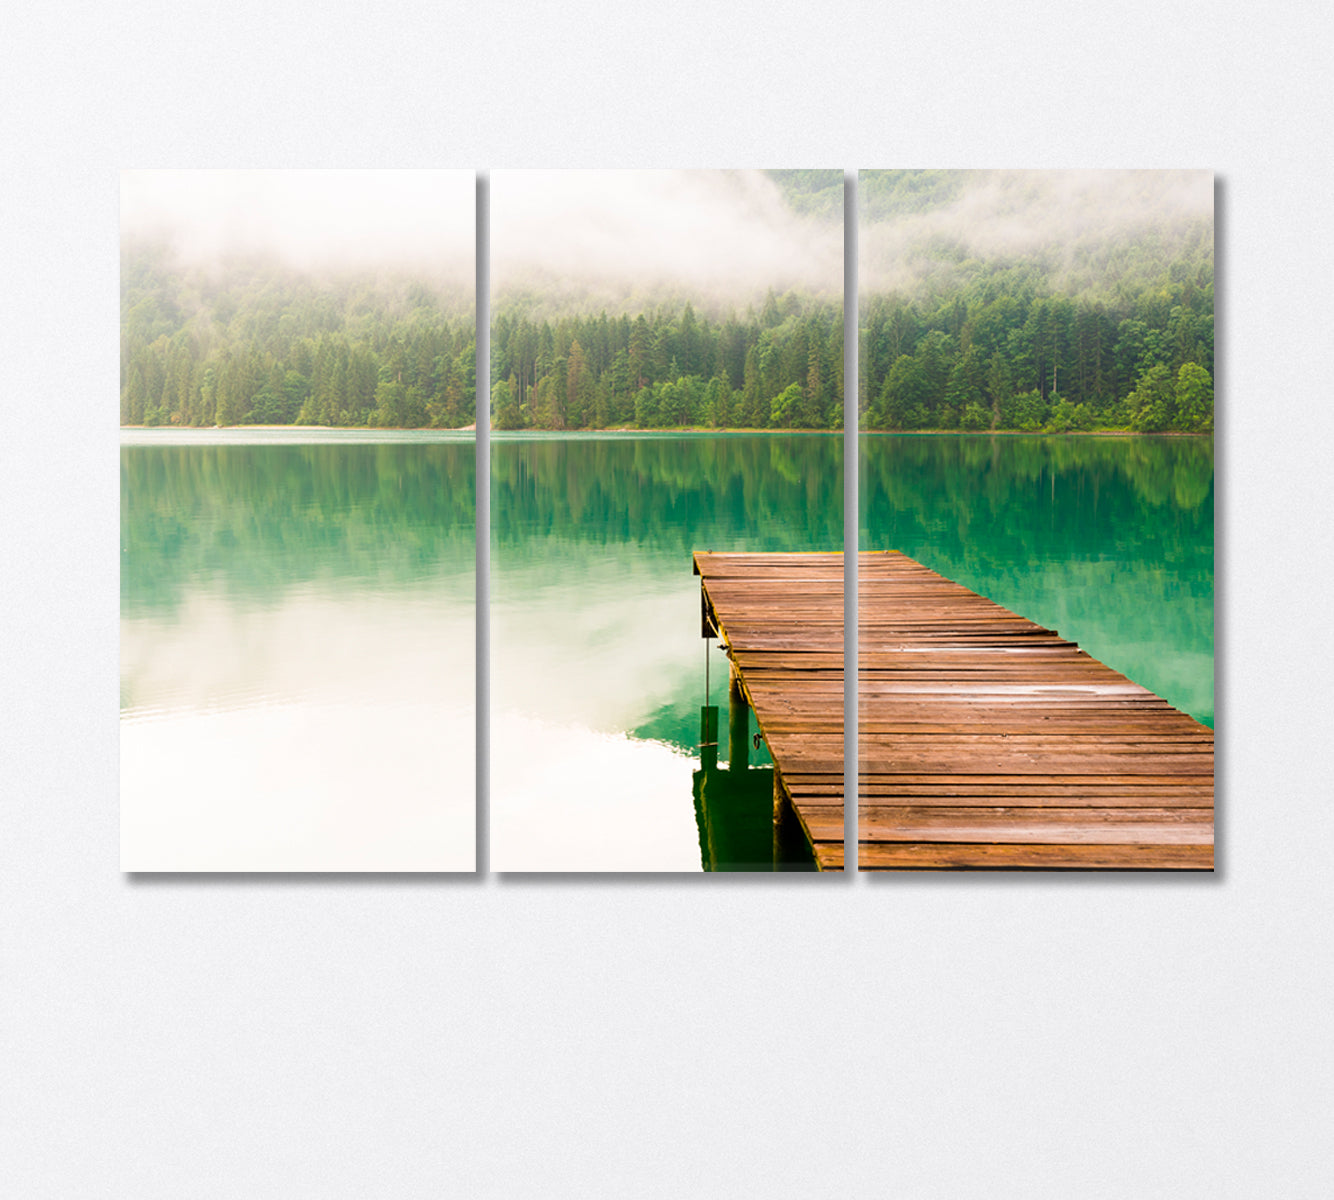 Foggy Morning Pier at Lake Canvas Print-Canvas Print-CetArt-3 Panels-36x24 inches-CetArt